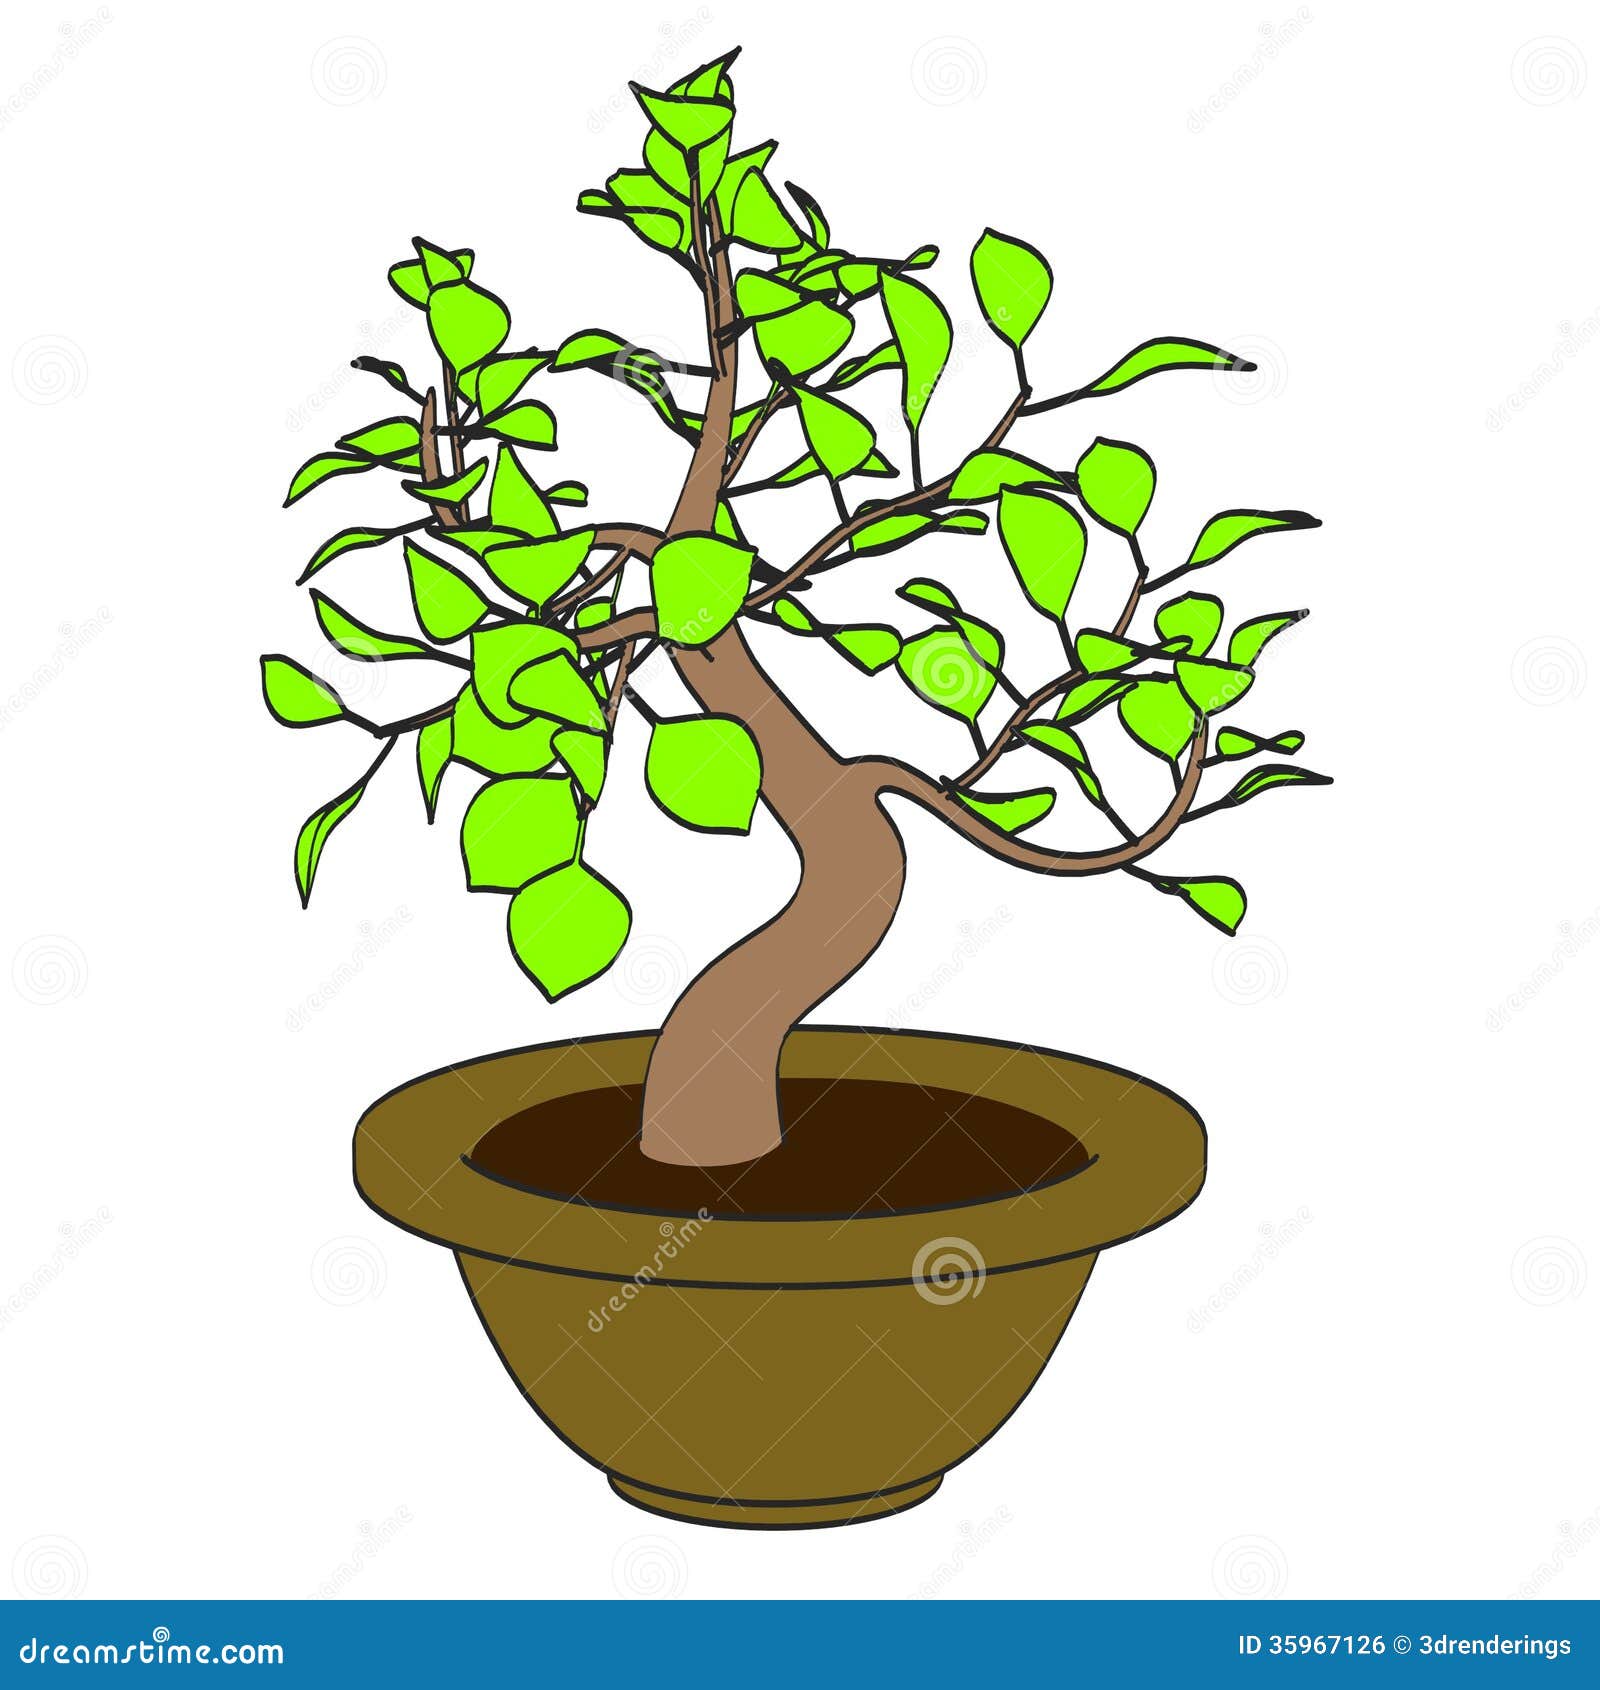 bonsai tree clipart - photo #34